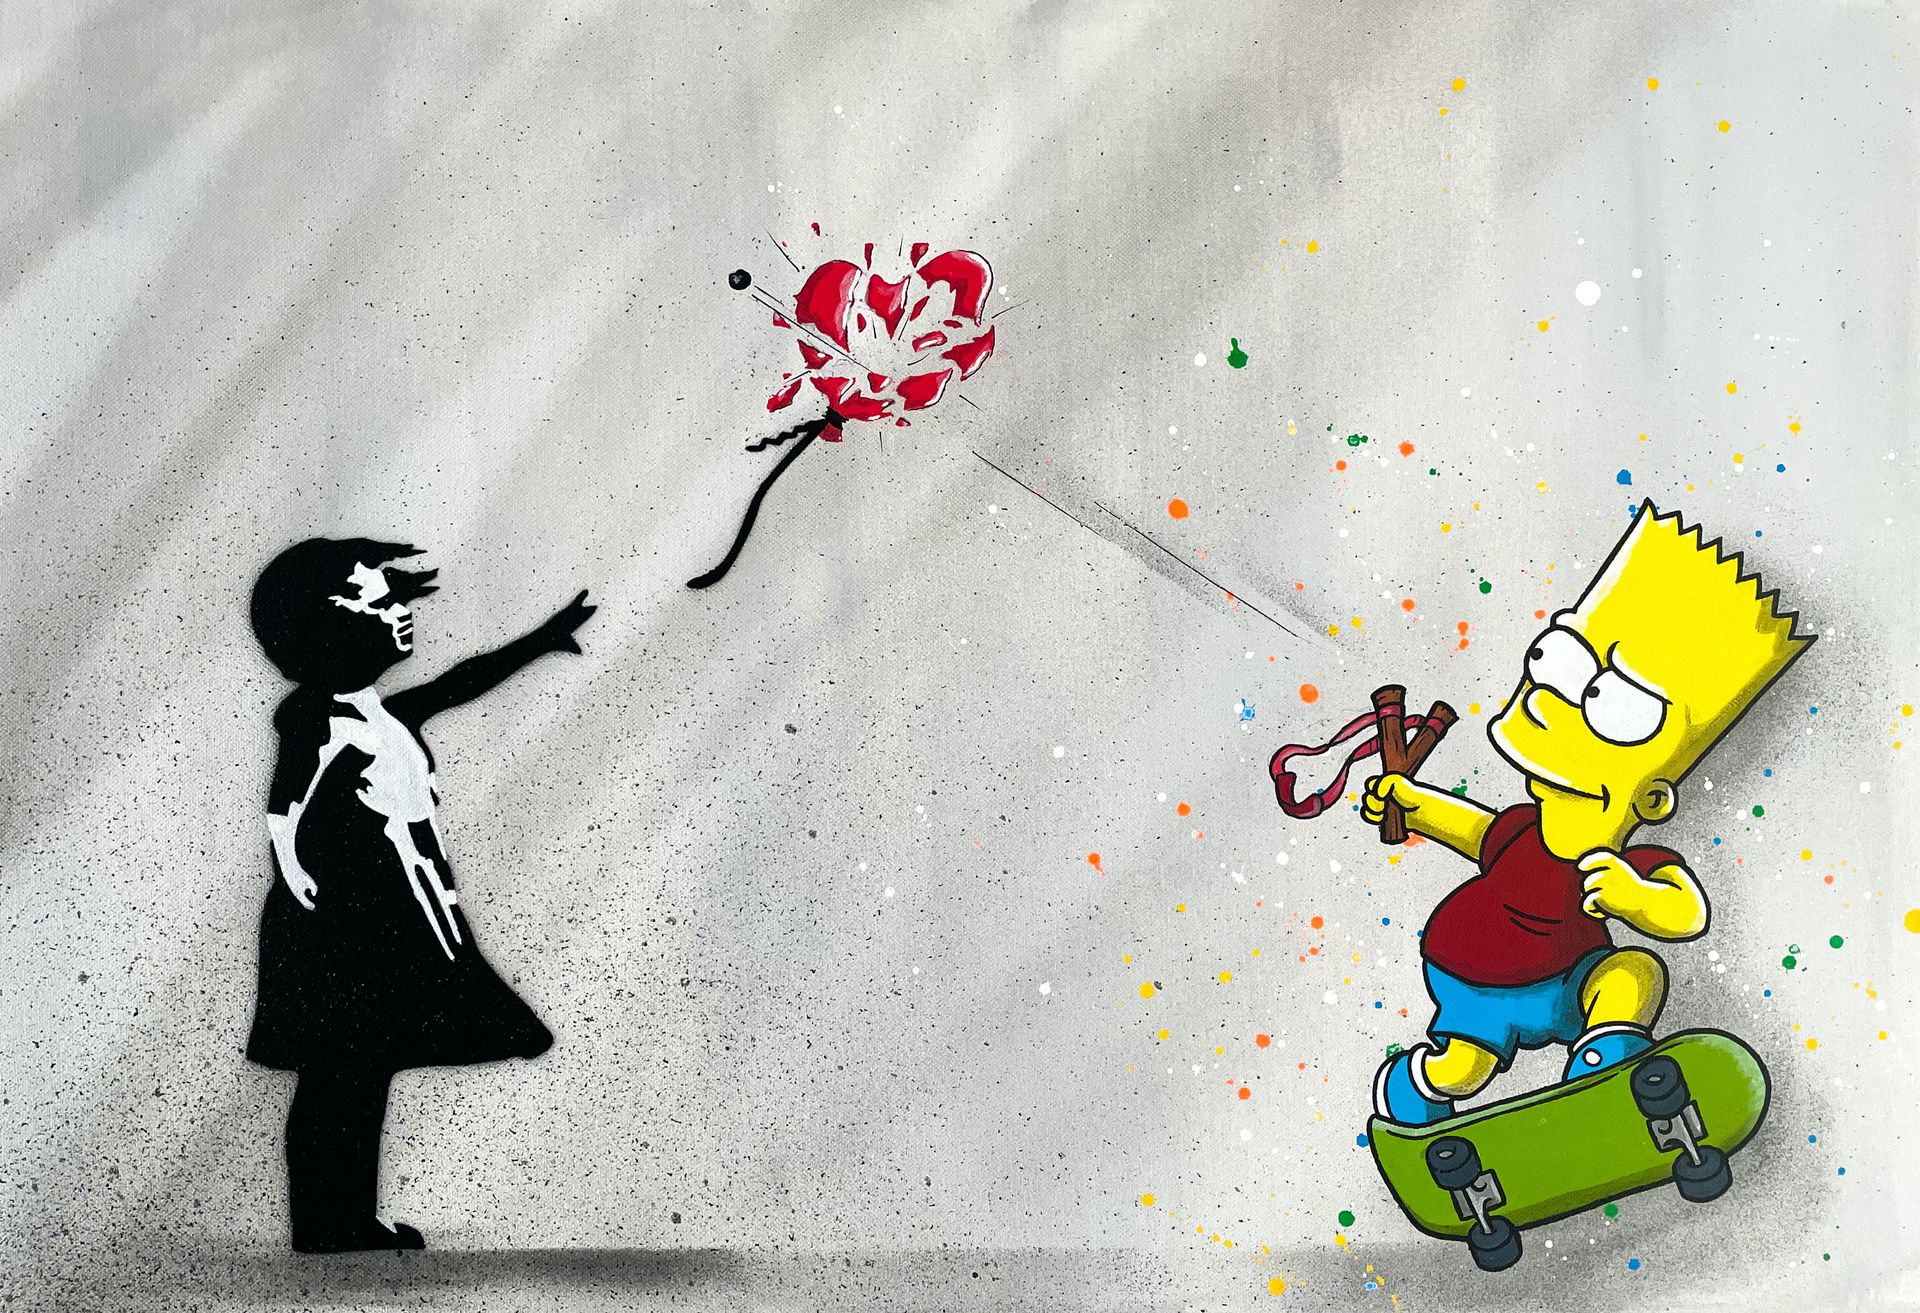 Anthony GRIP Bart VS Banksy, 2022
Mixed media, aerosol, acrylic, marker on canva&hellip;